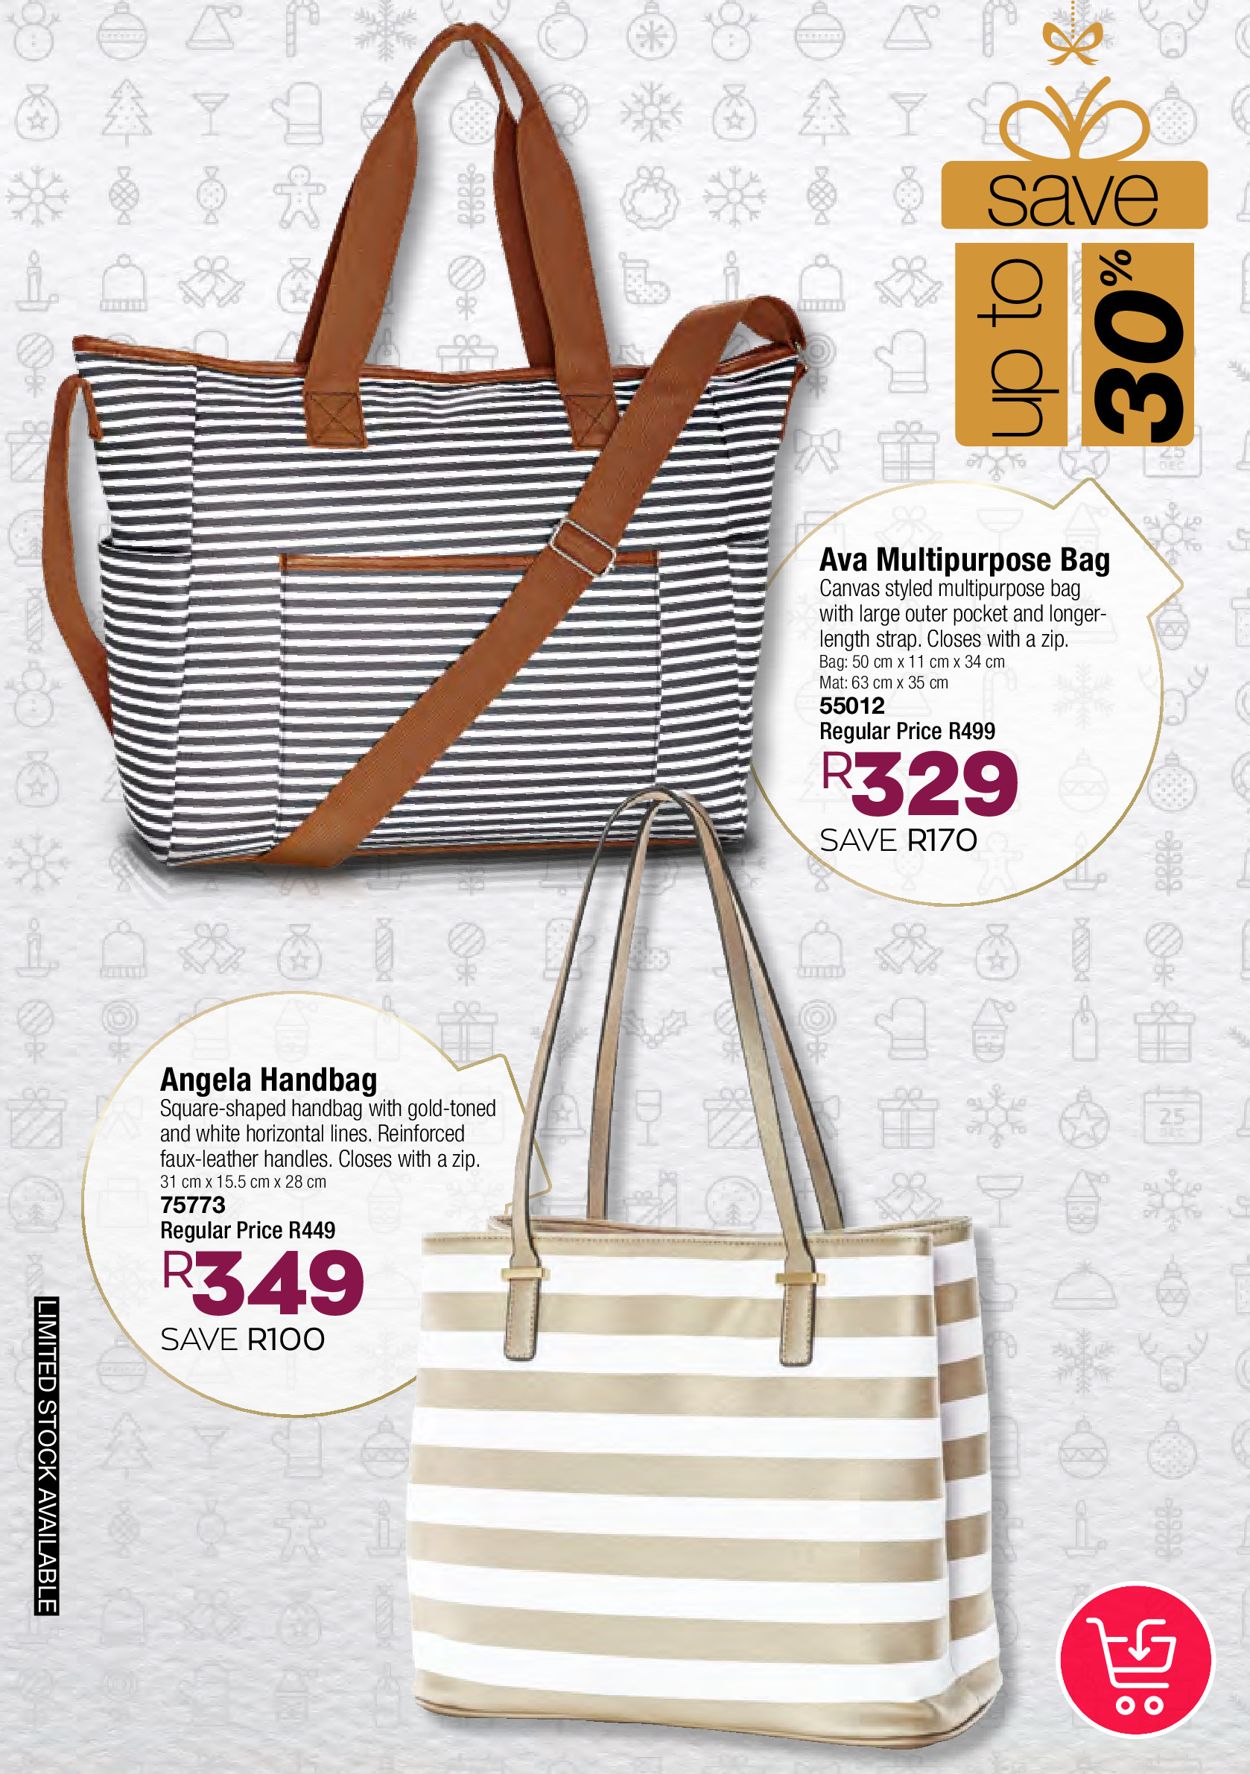 Avon Fashions' Bags Perfectly Match The Many Lives of Angel Locsin - Orange  Magazine